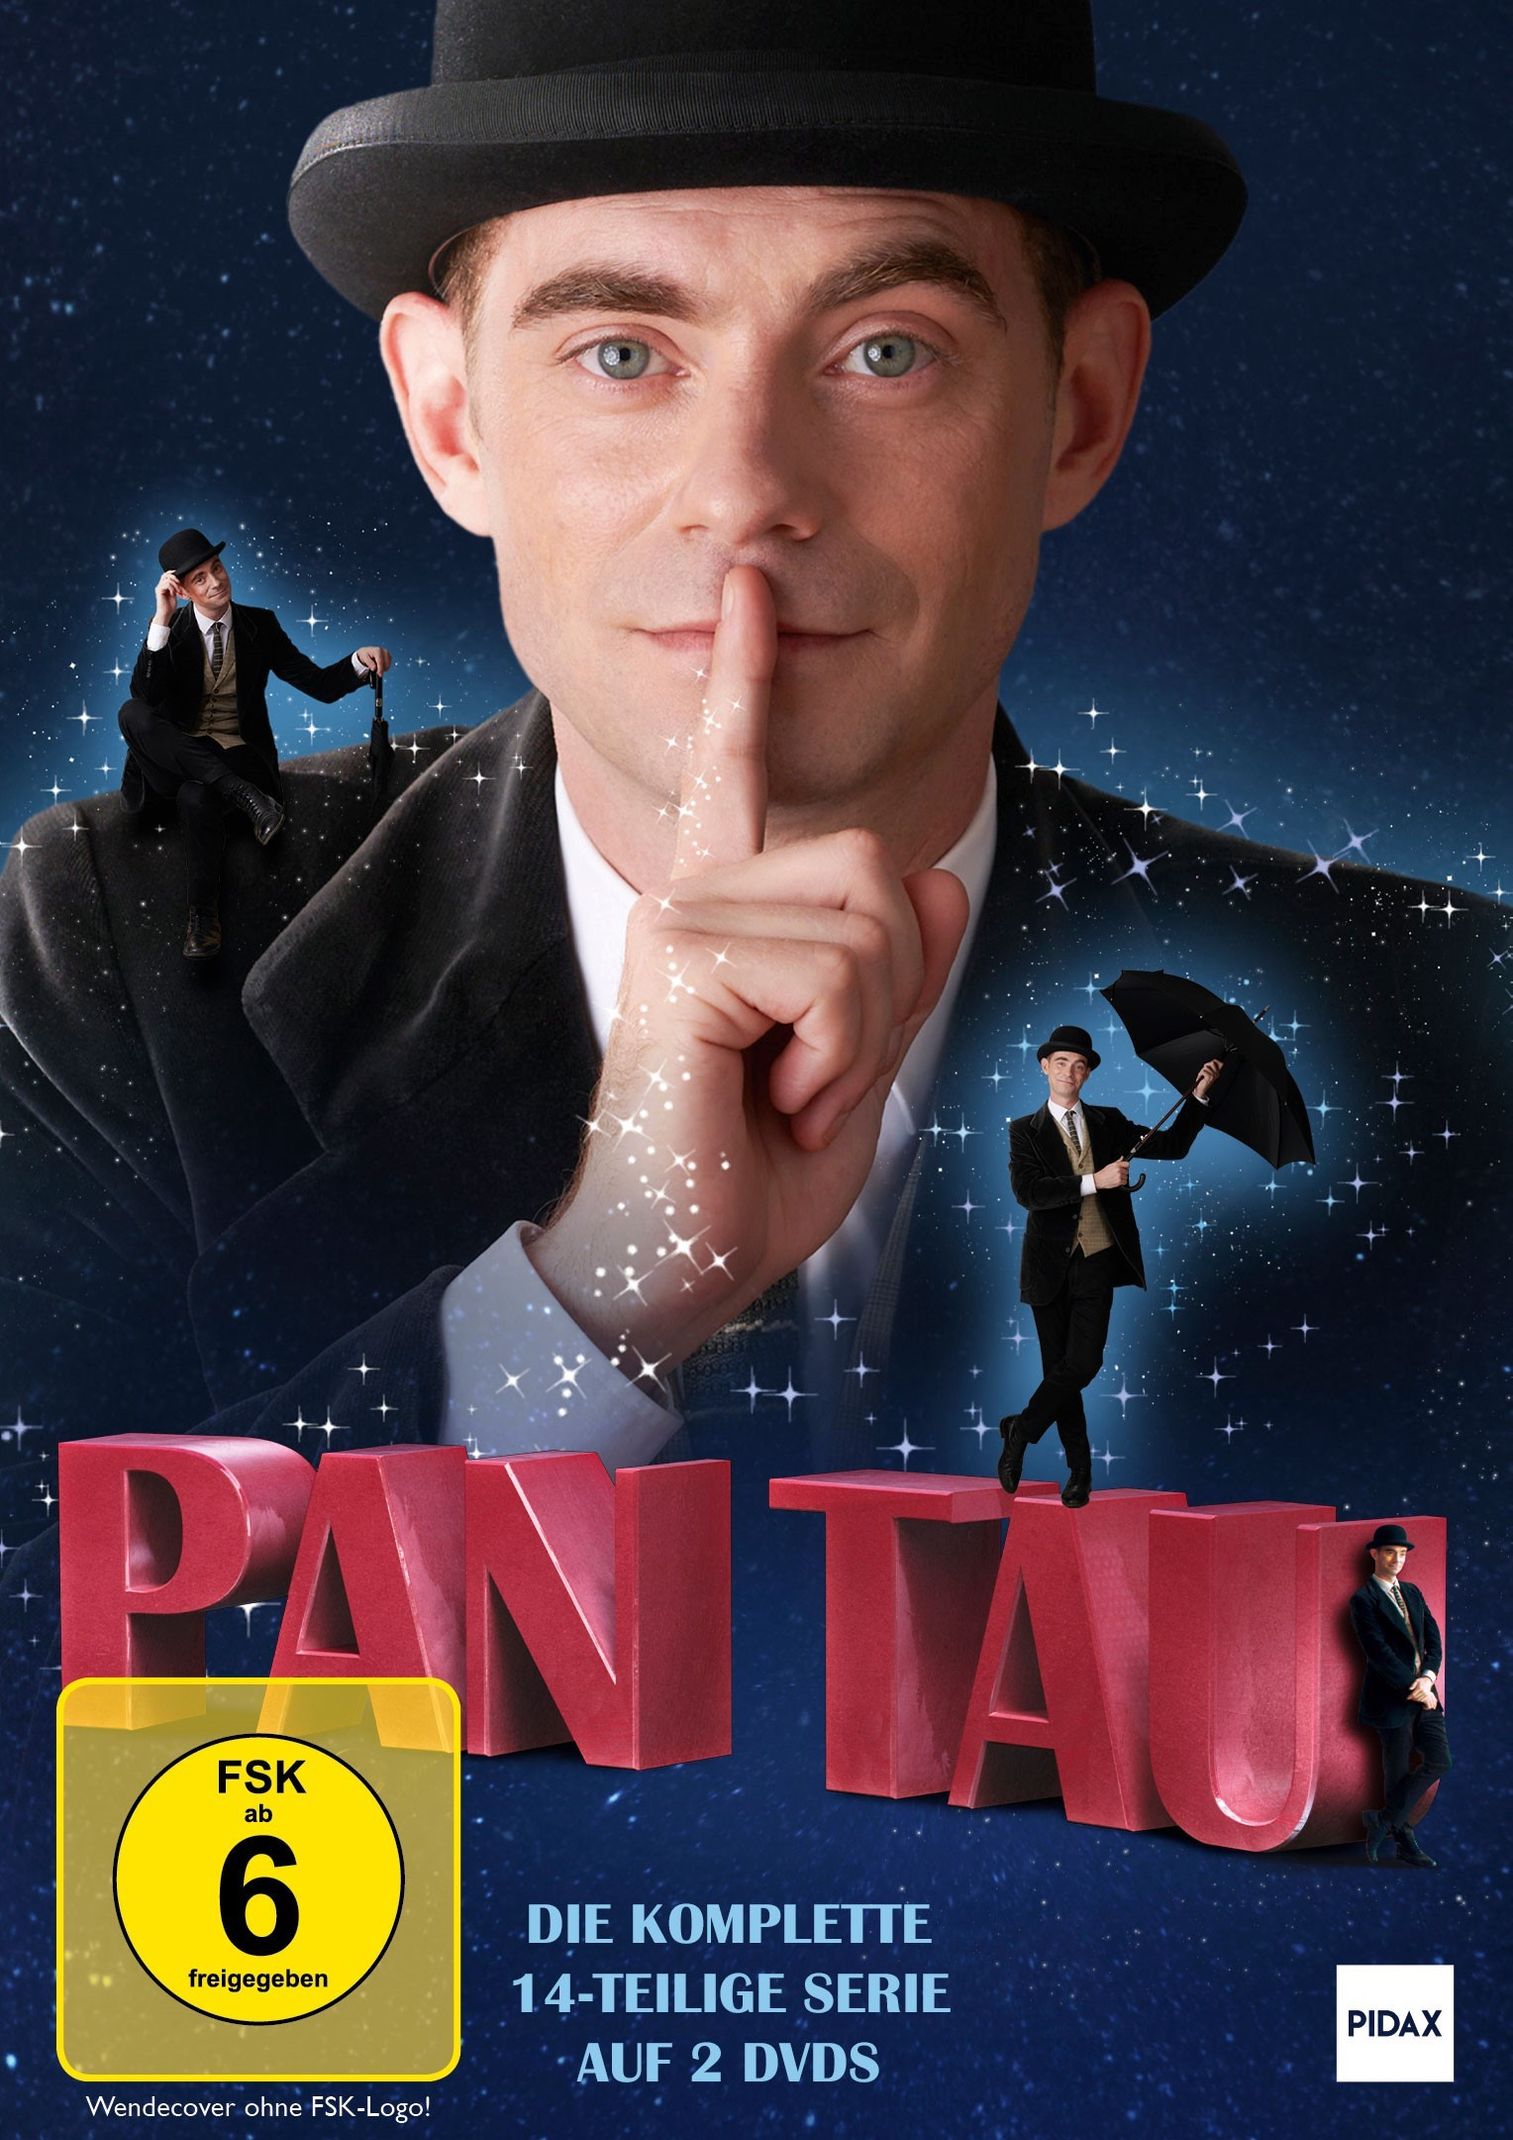 Pan Tau DVD jetzt bei Weltbild.de online bestellen